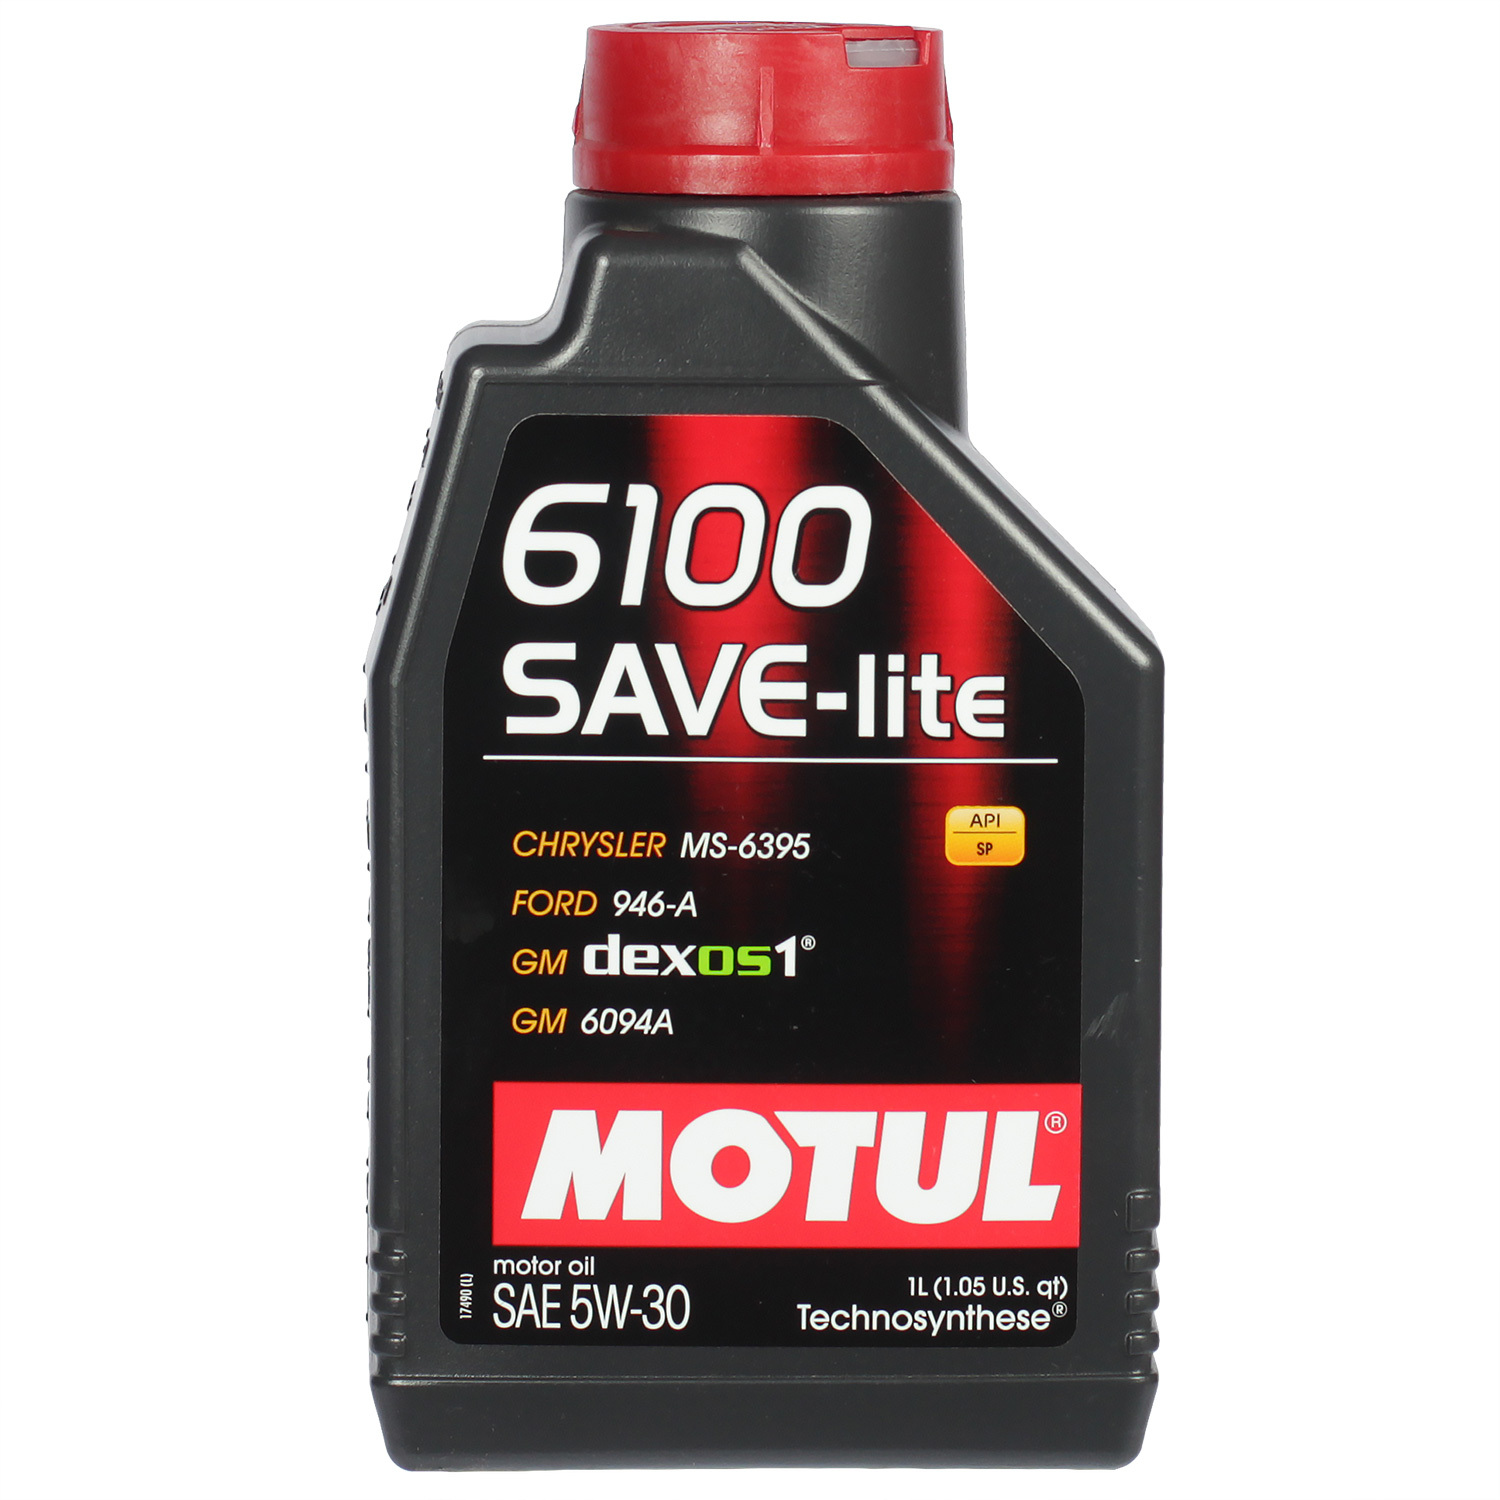 Motul Моторное масло Motul 6100 Save-lite 5W-30, 1 л motul моторное масло motul 6100 synclean 5w 30 1 л